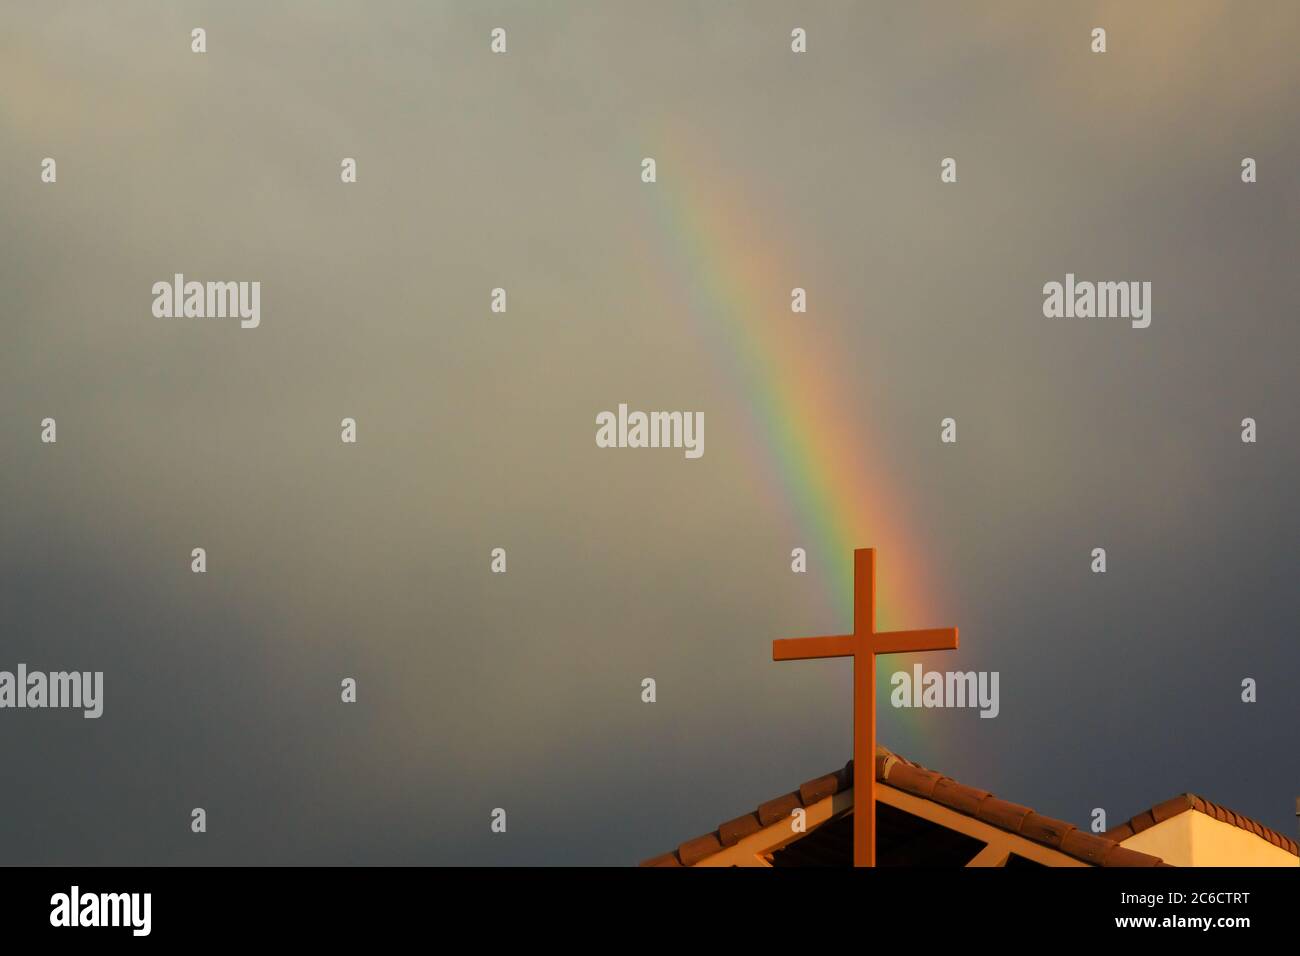 A passing storm creates a rainbow over a church cross. Stock Photo